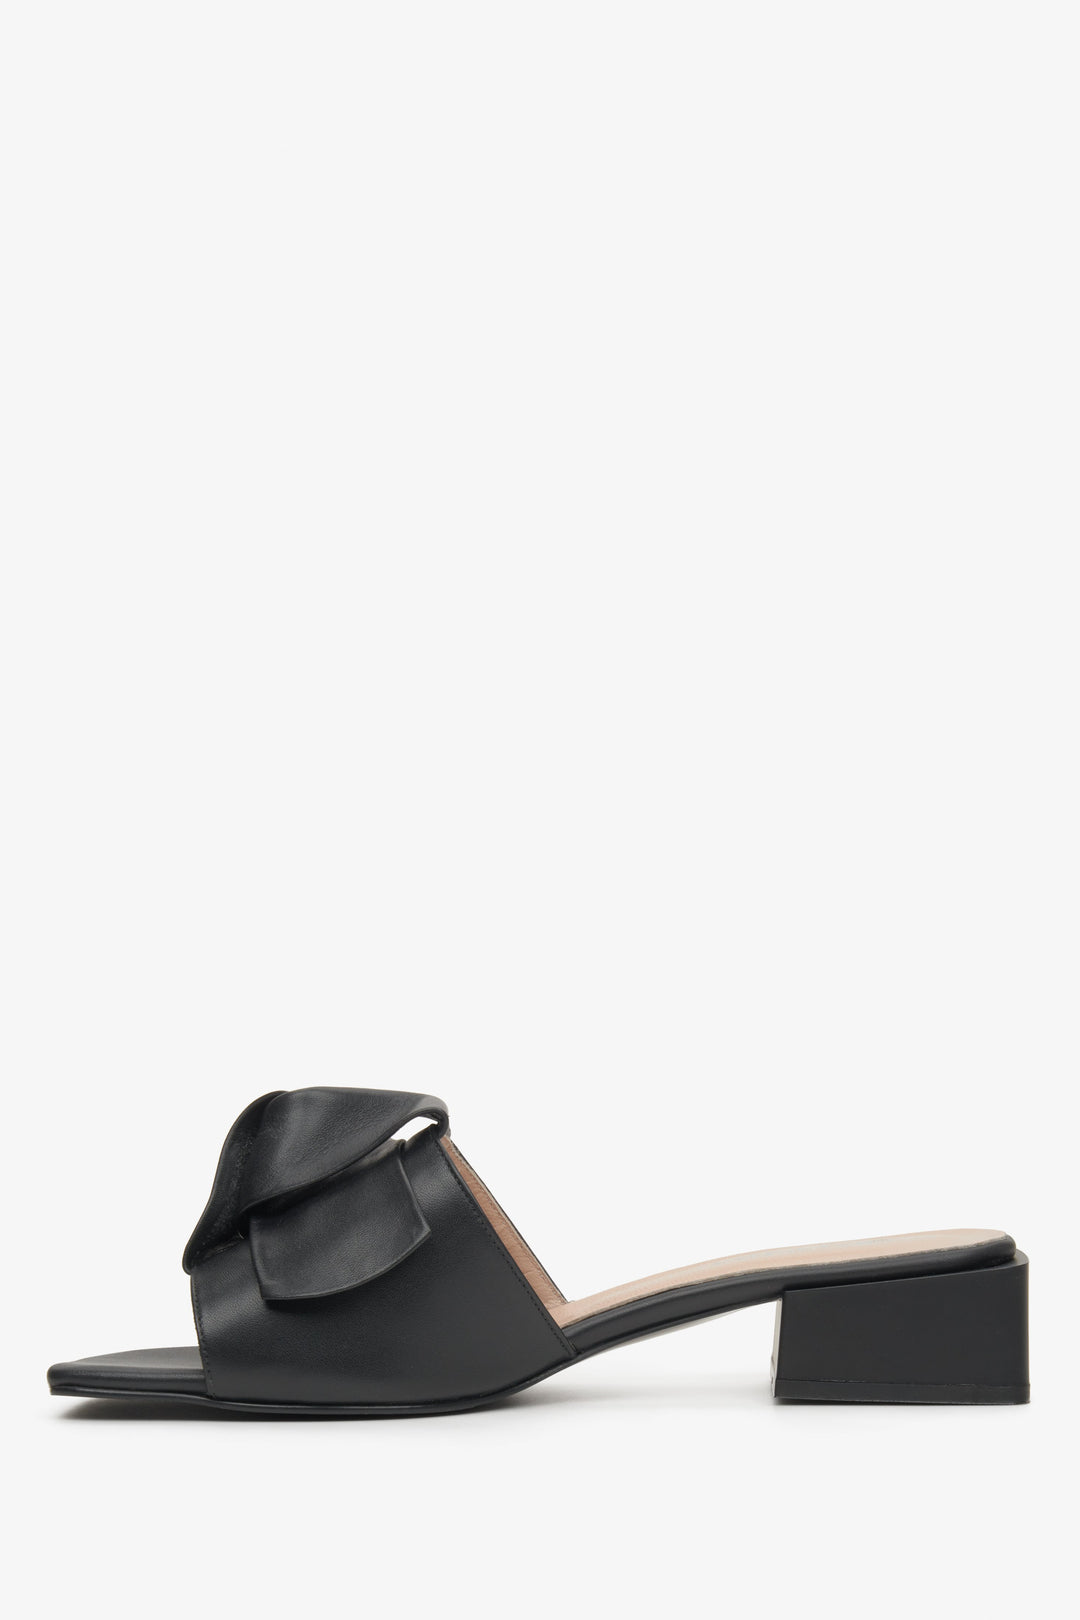 Low black leather mules by Estro - shoe profile.